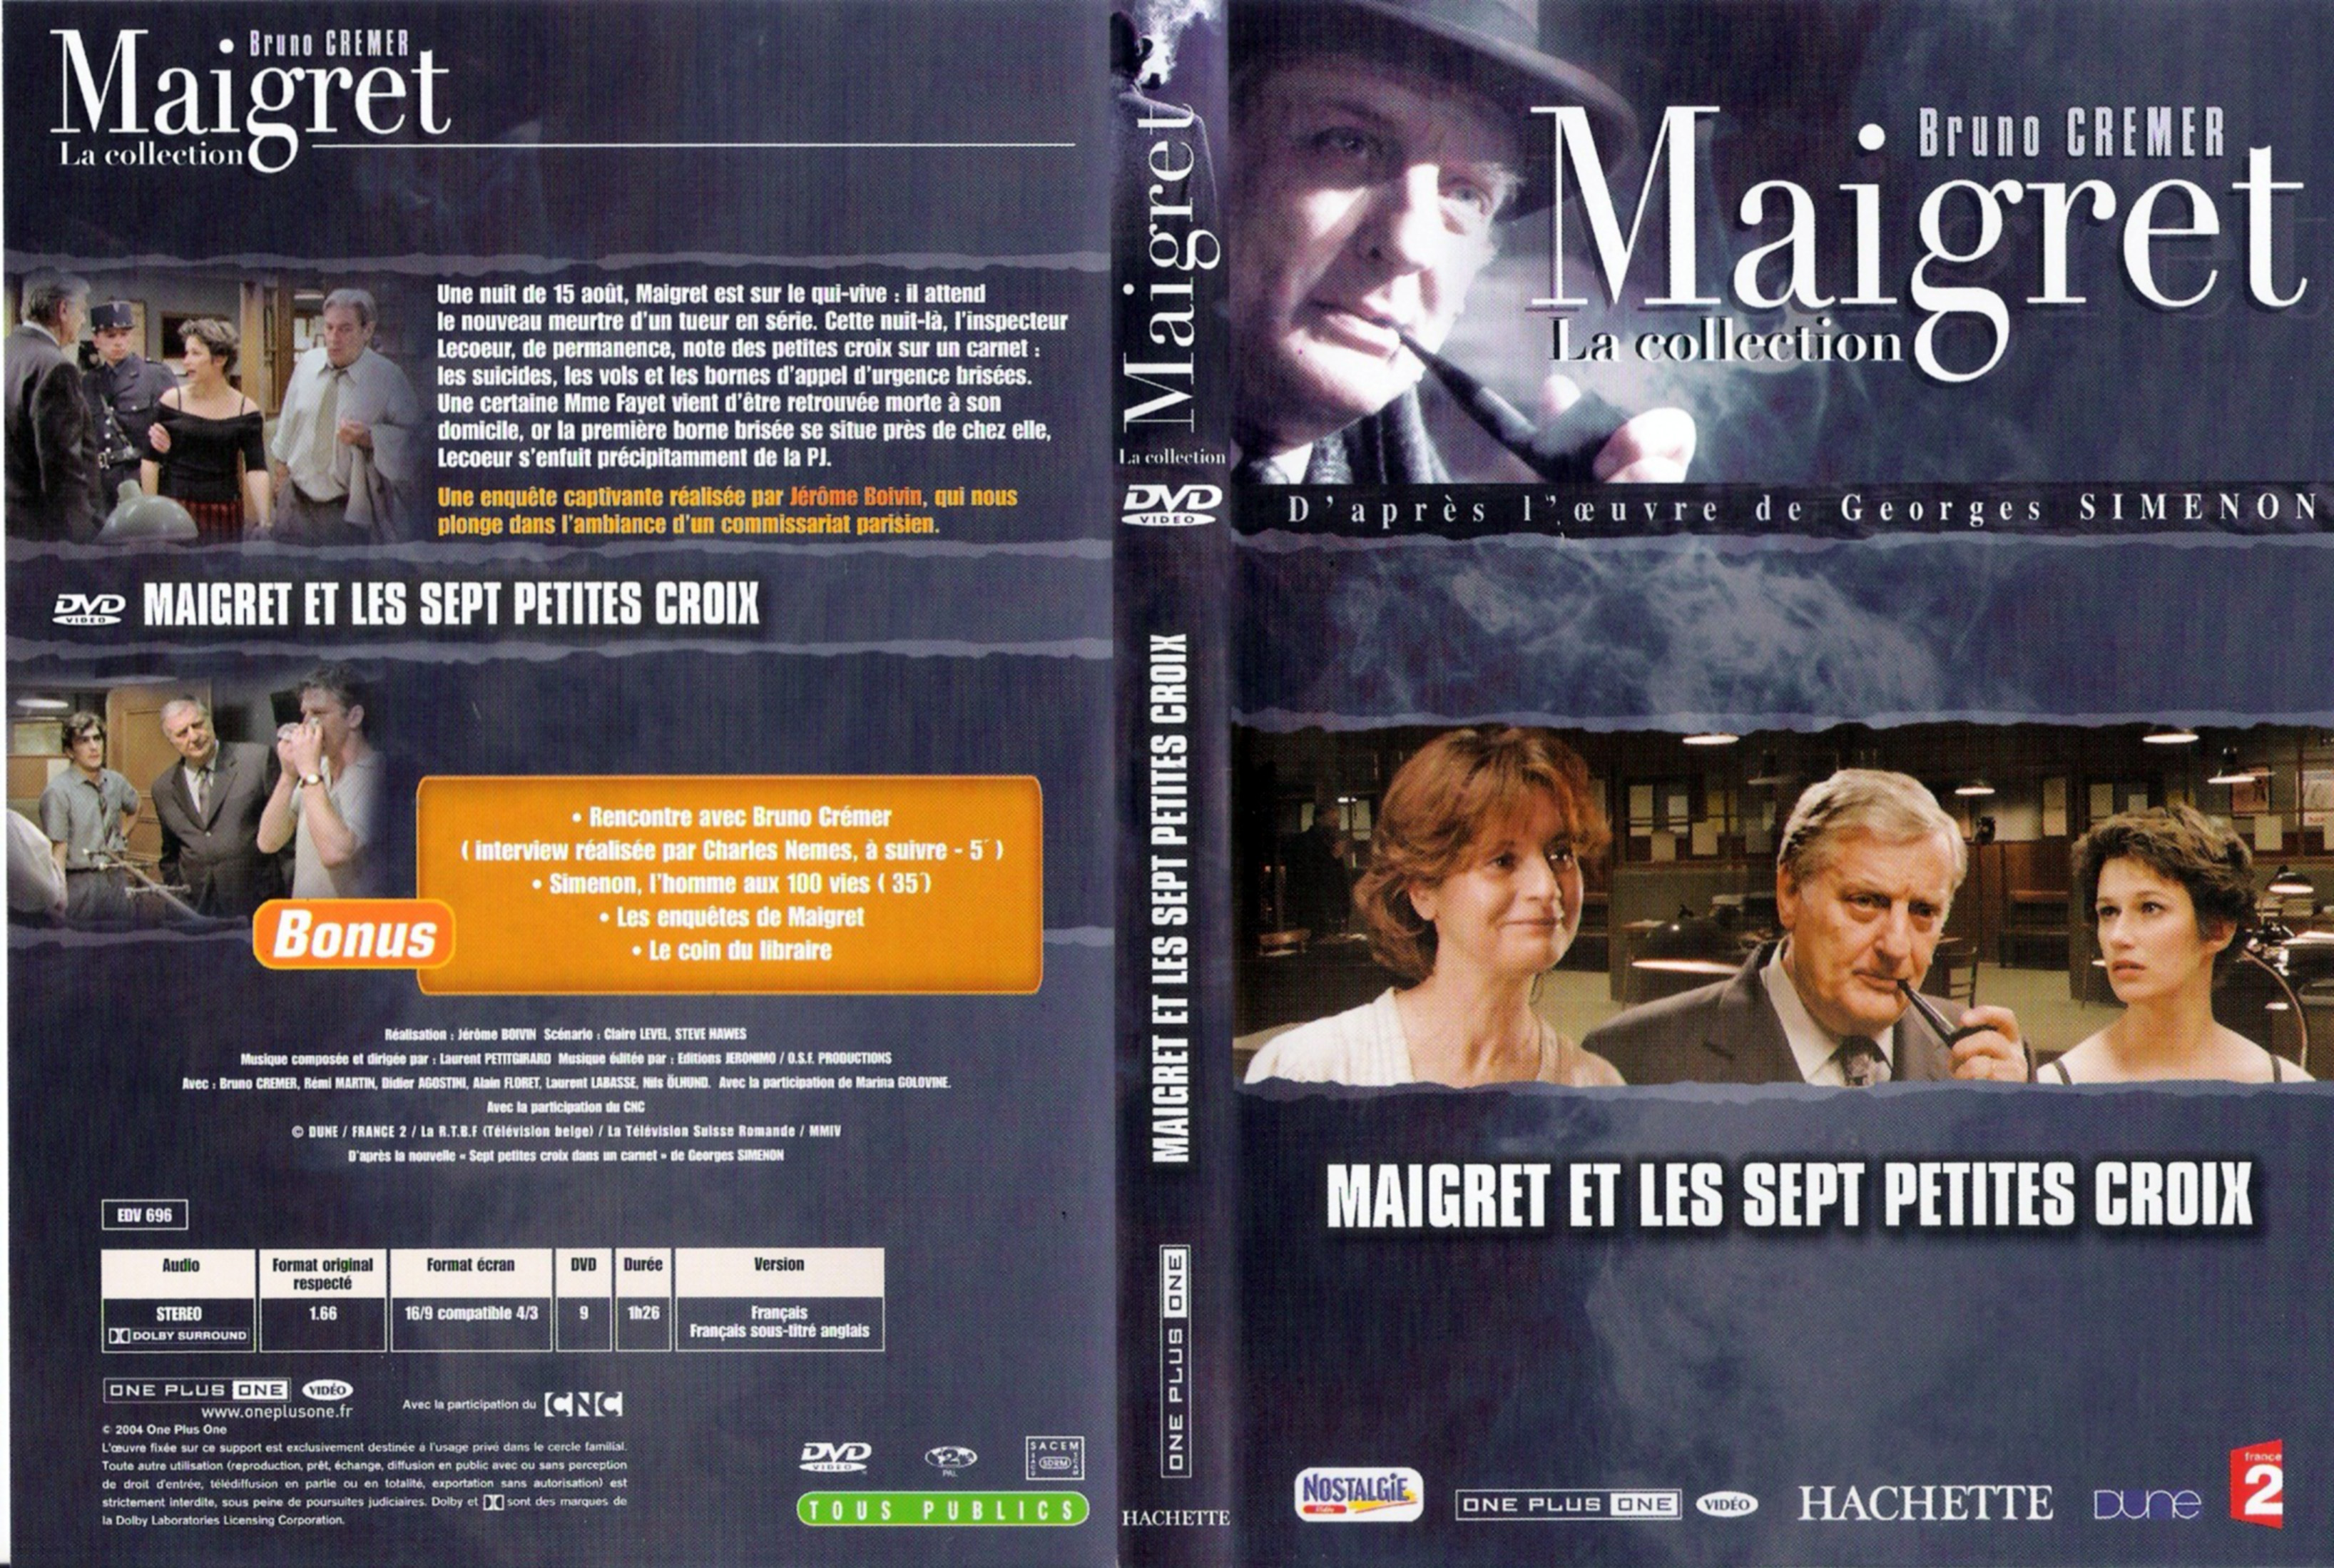 Jaquette DVD Maigret et les sept petites croix (Bruno Cremer)